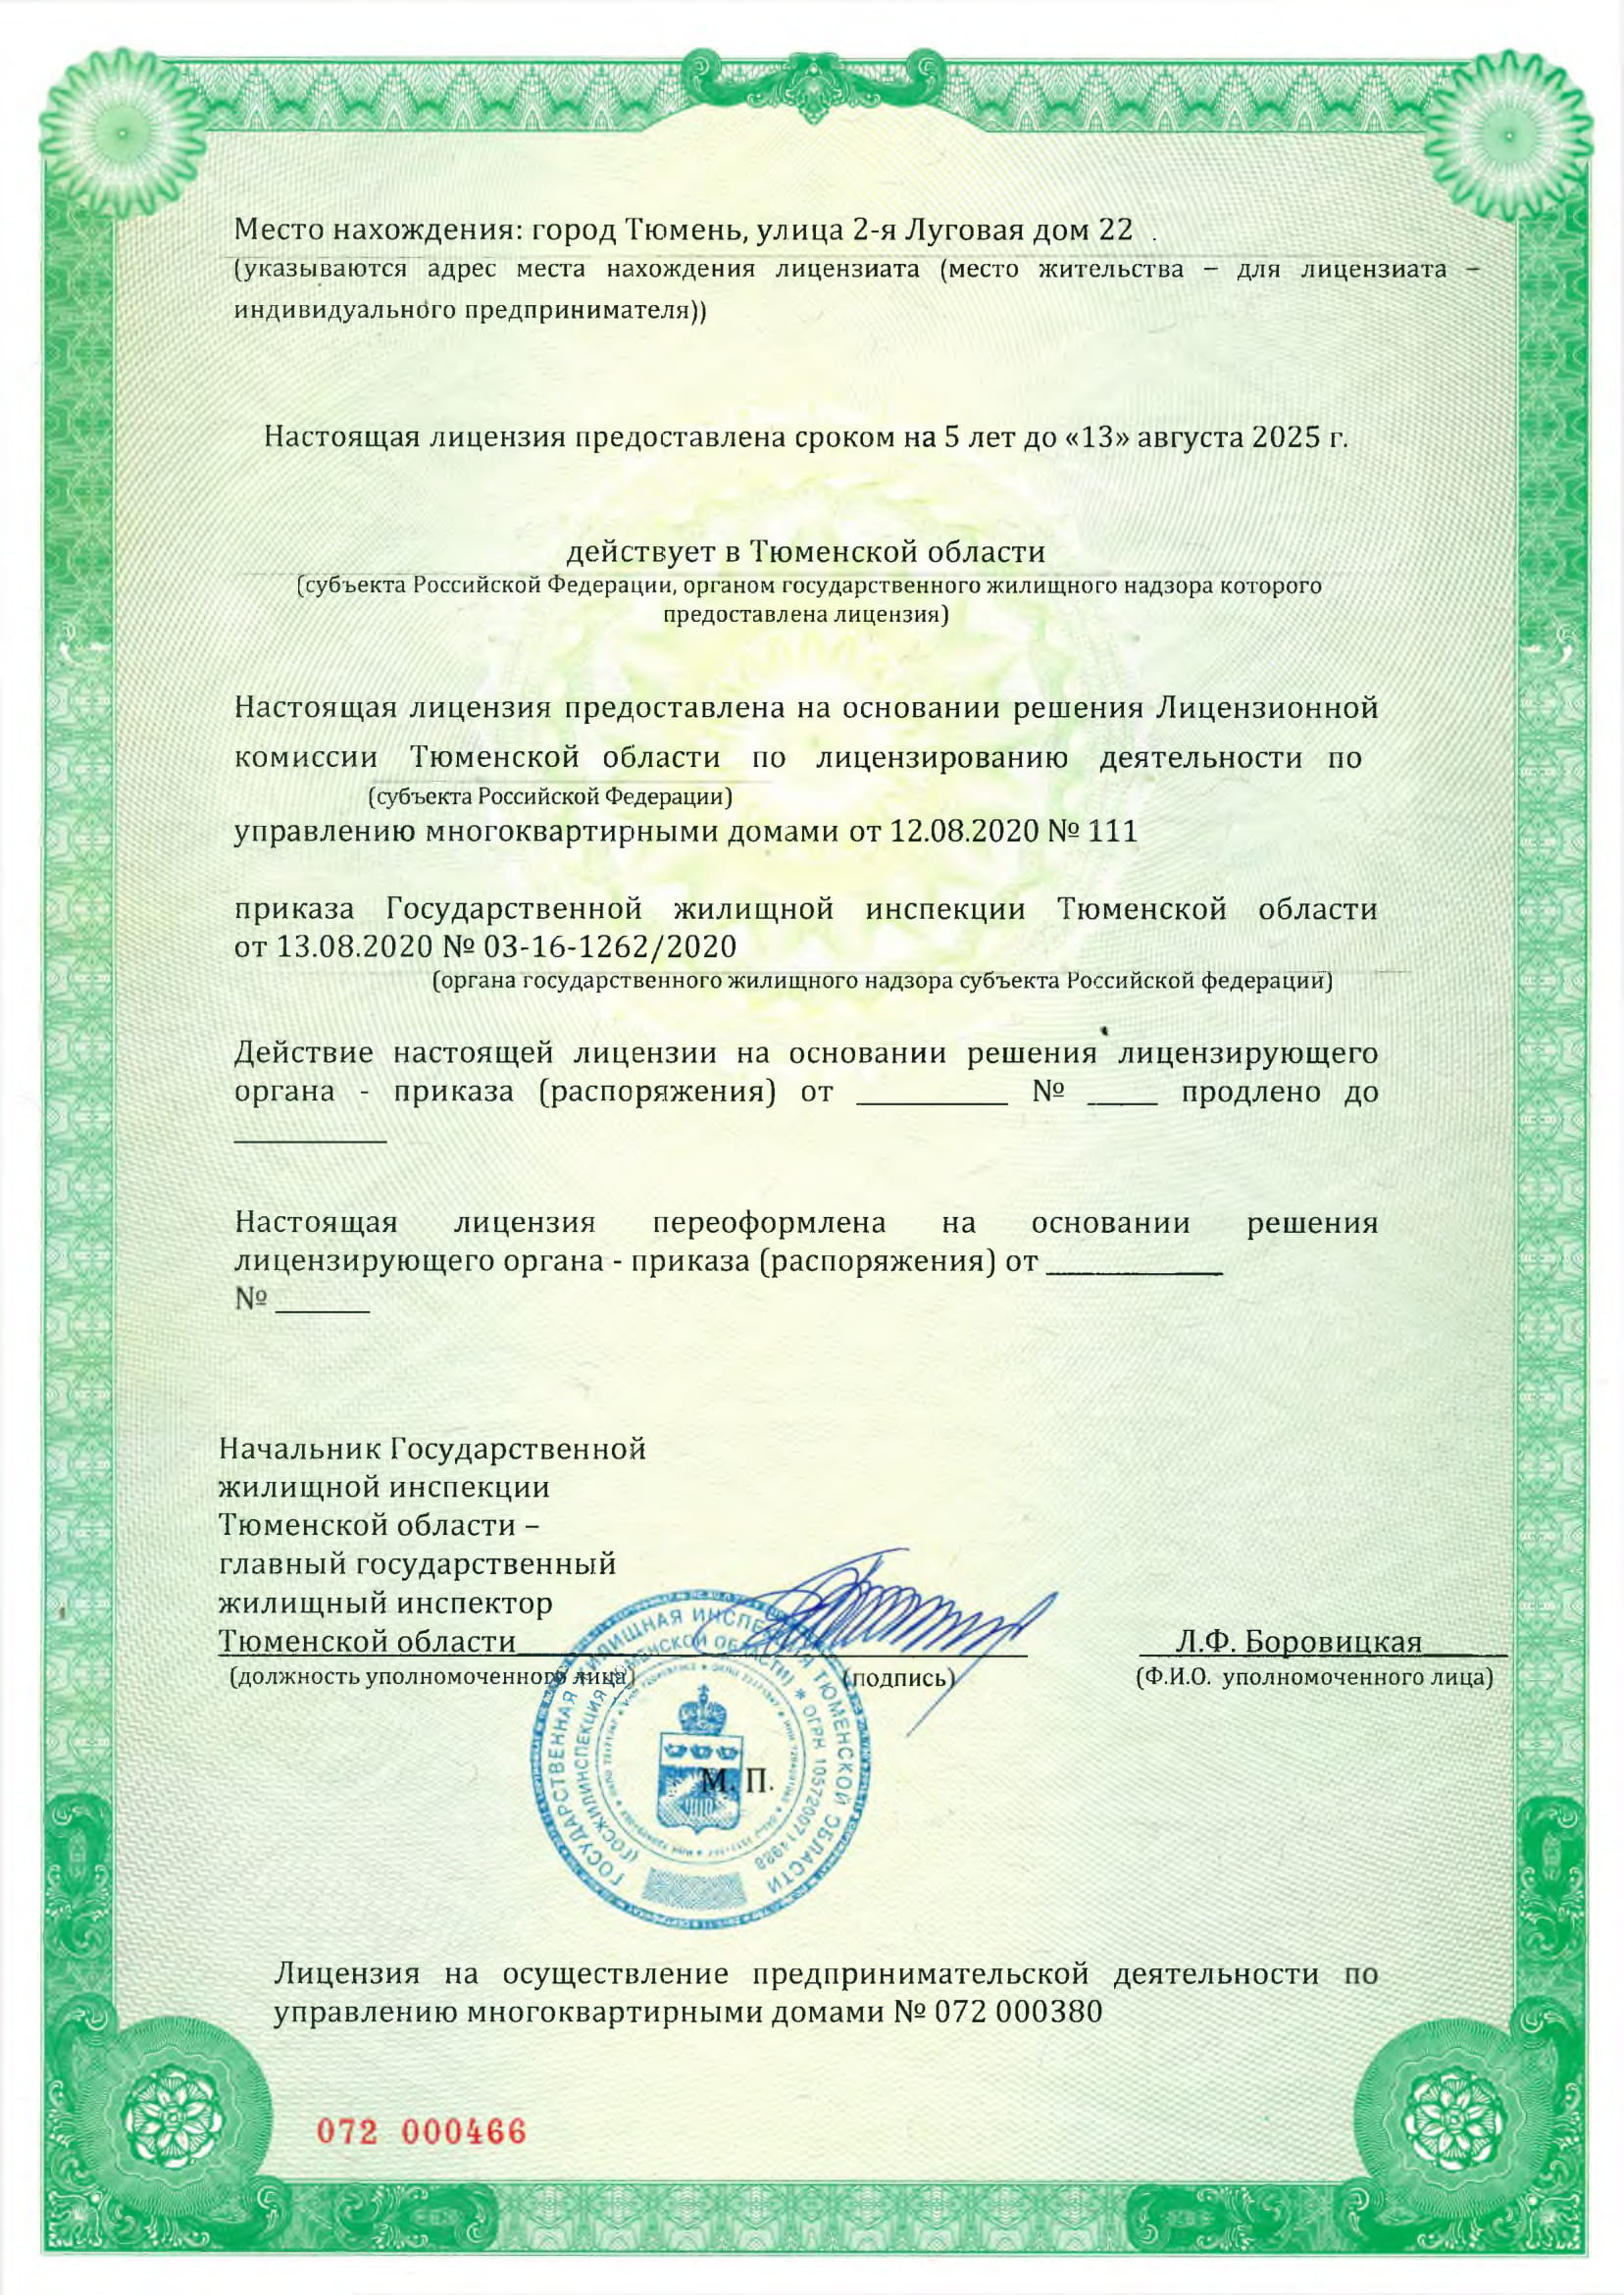 Лицензия на управление МКД №072 000380 от 13.08.2020